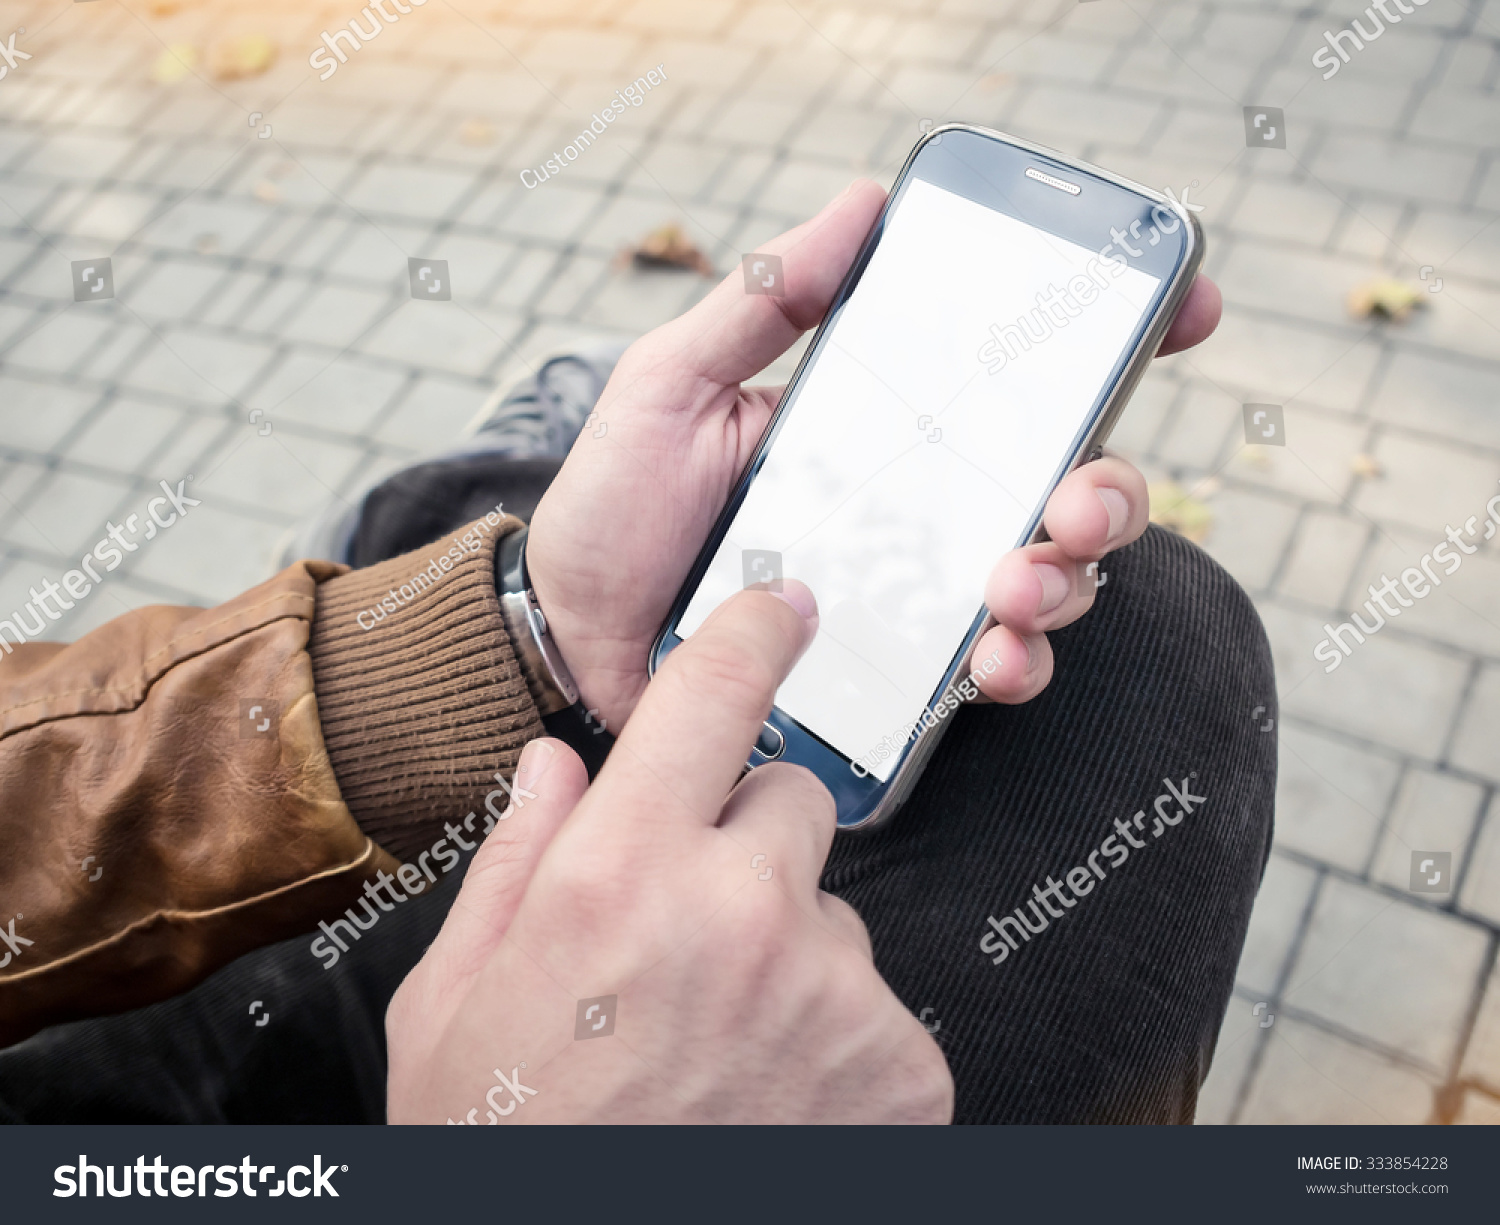 Mockup of mobile smartphone in man's hands #333854228